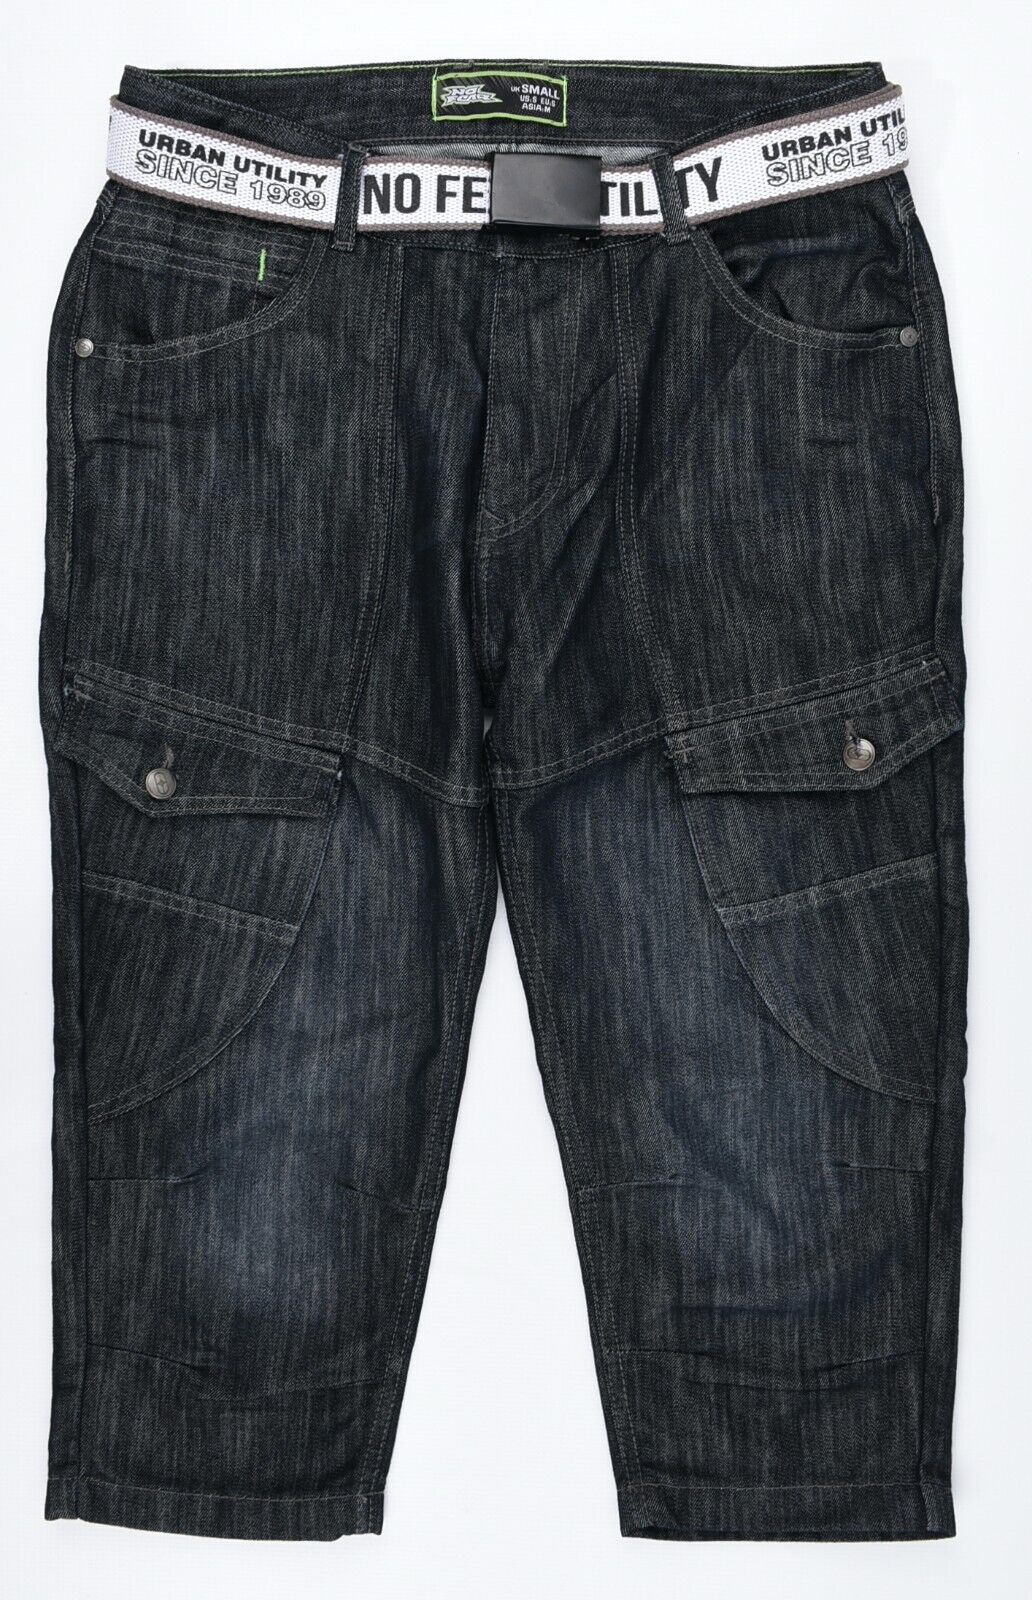 NO FEAR Men's Denim Shorts, Cargo Fit, Dark Blue Wash, size SMALL